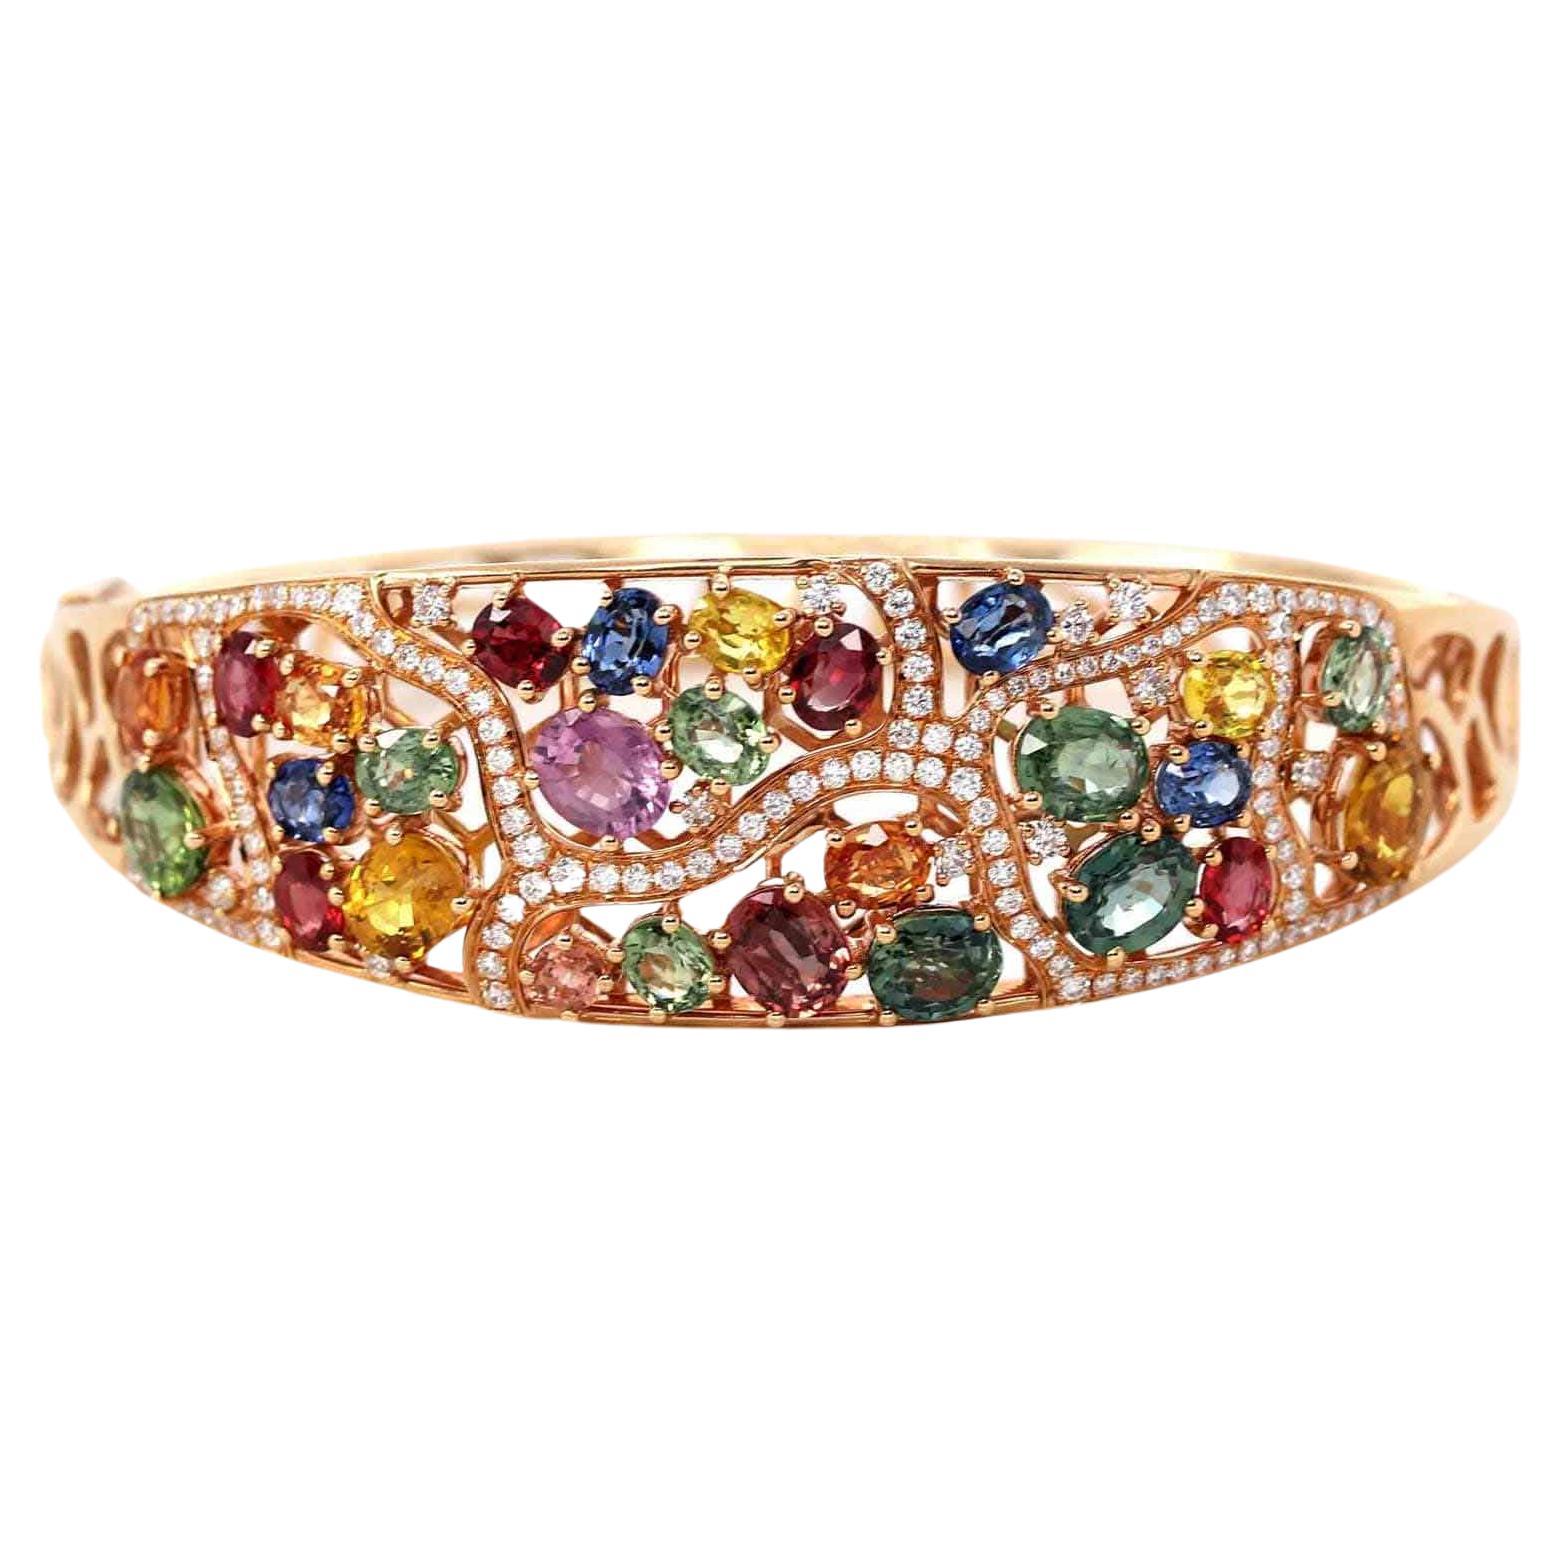 18K Rose Gold Multi-Colors Sapphire Bangle Bracelet with 1ct Diamonds